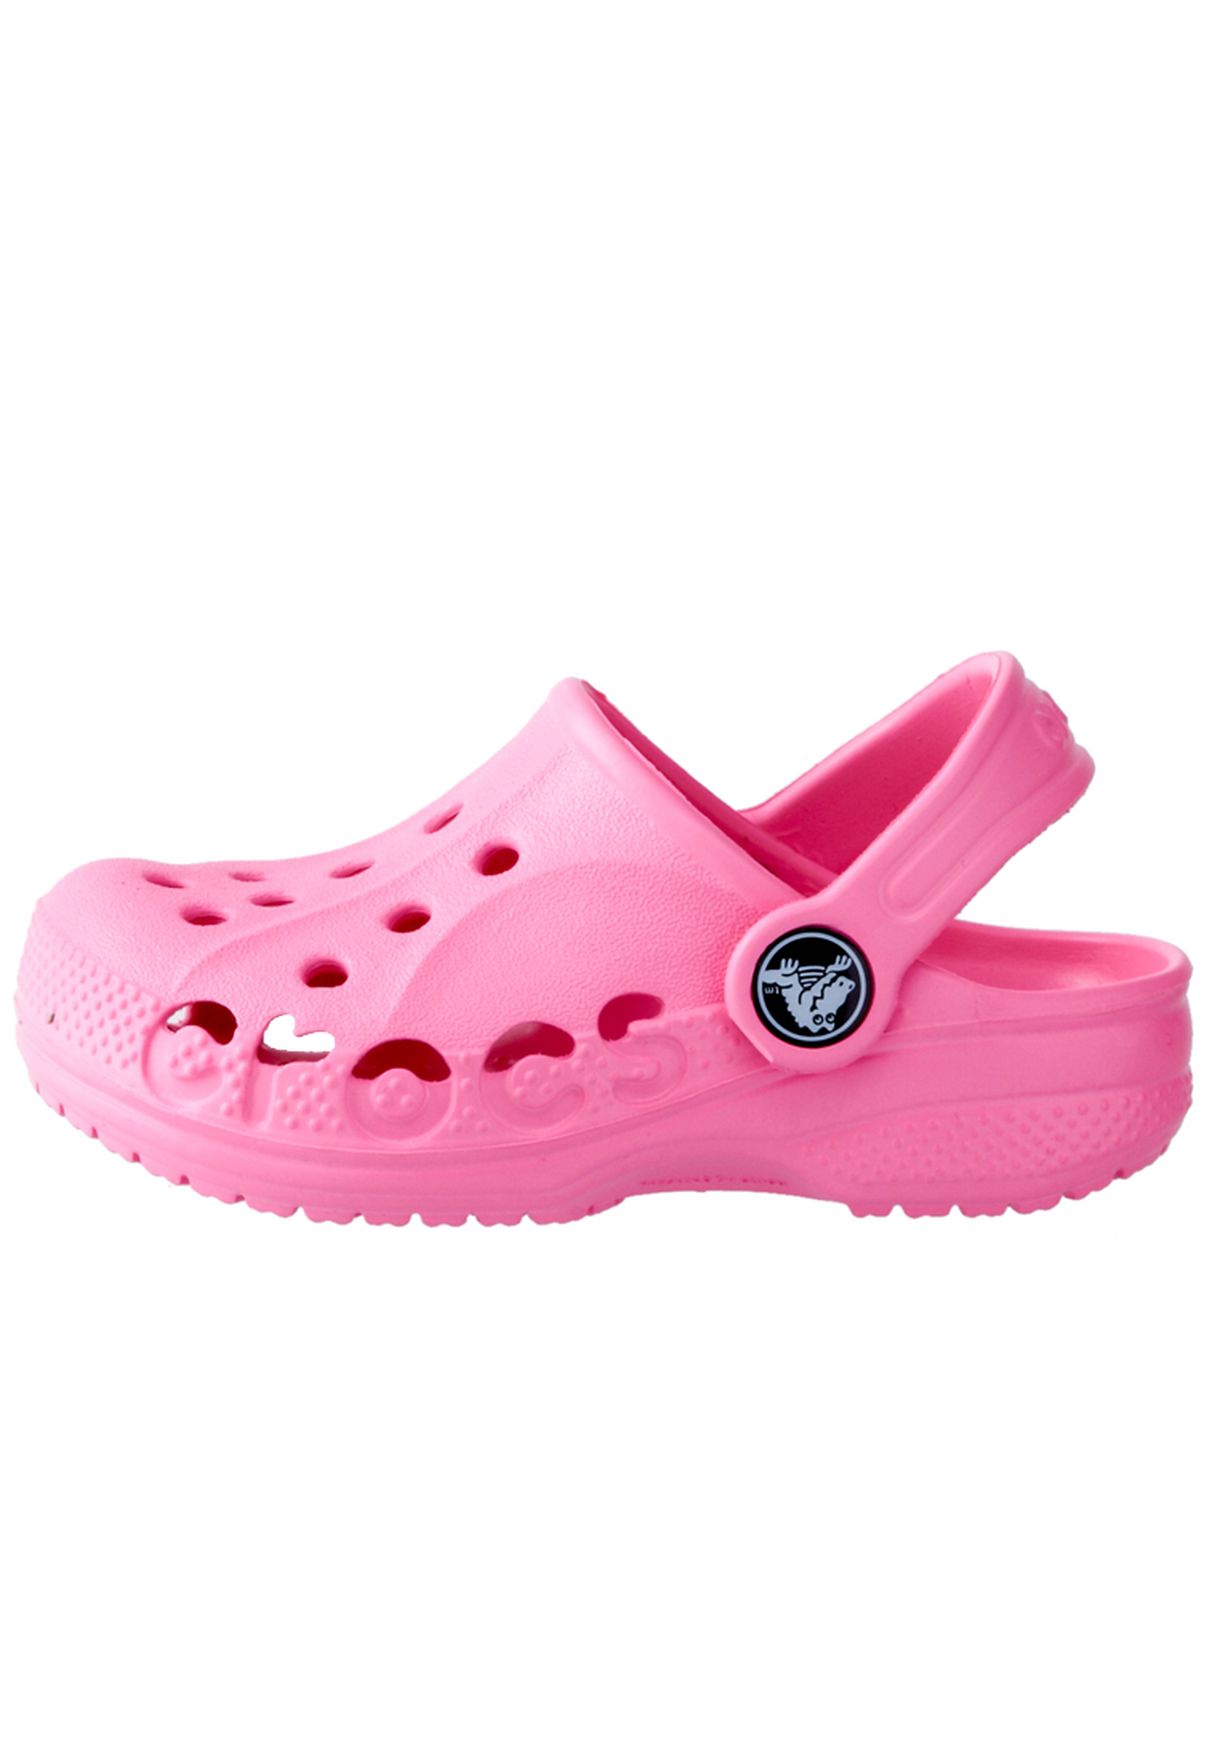 where to buy kids crocs